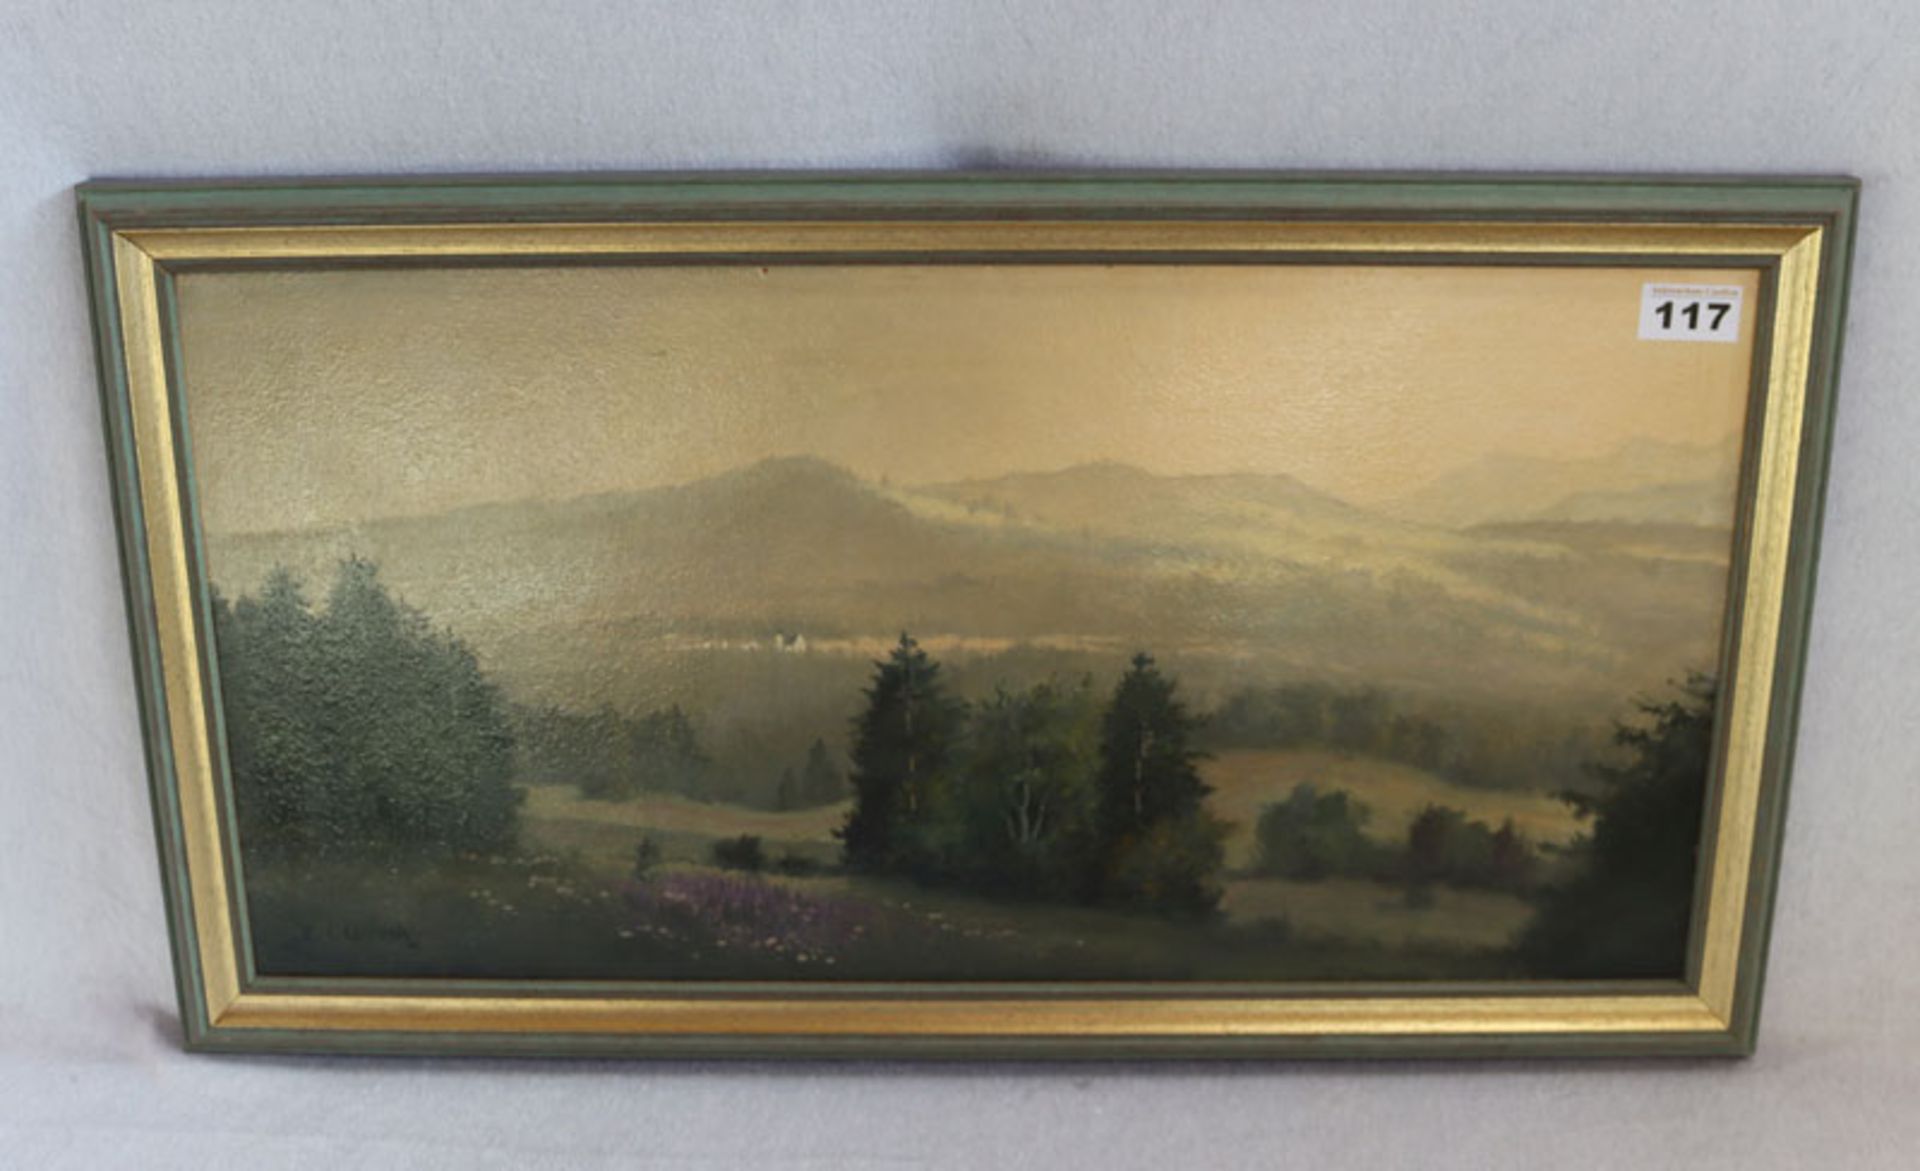 Gemälde ÖL/Hartfaser 'Landschafts-Szenerie', signiert C. L. Loreck, Carl Ludwig Loreck, datiert